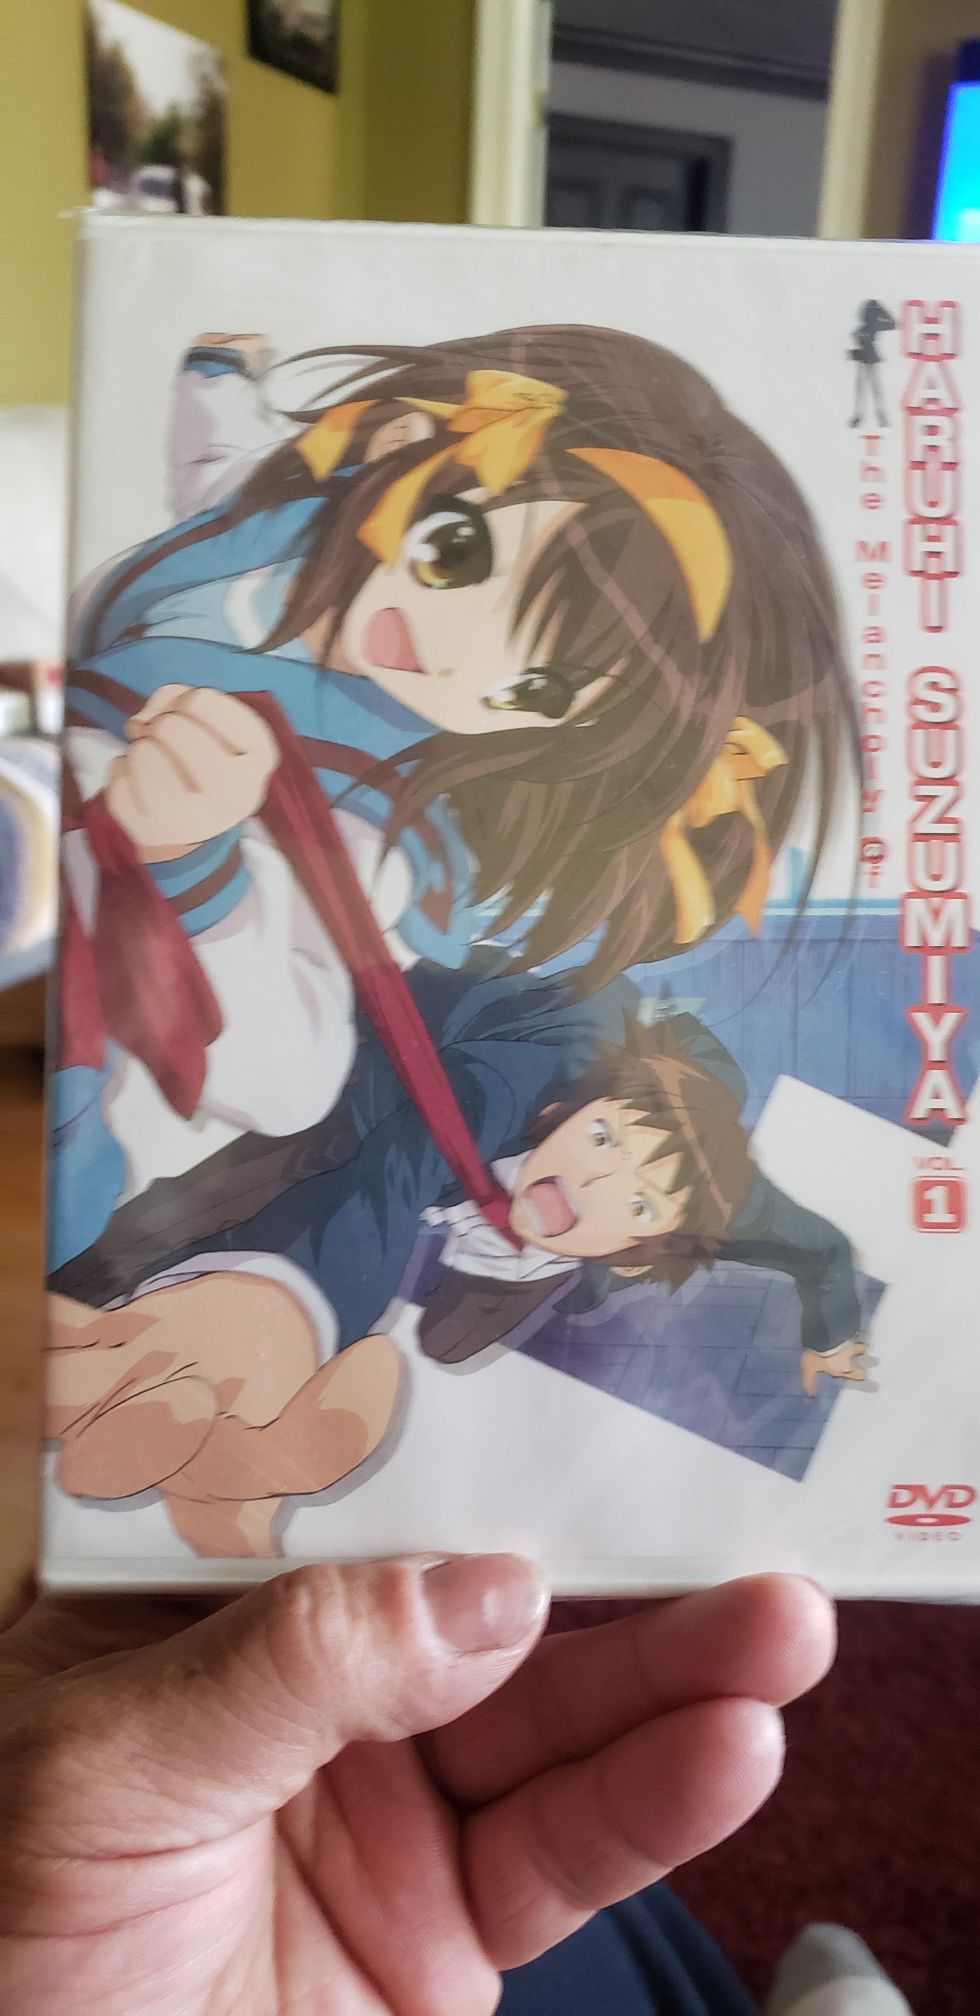 Haruhi suzumiya vol.1 movie